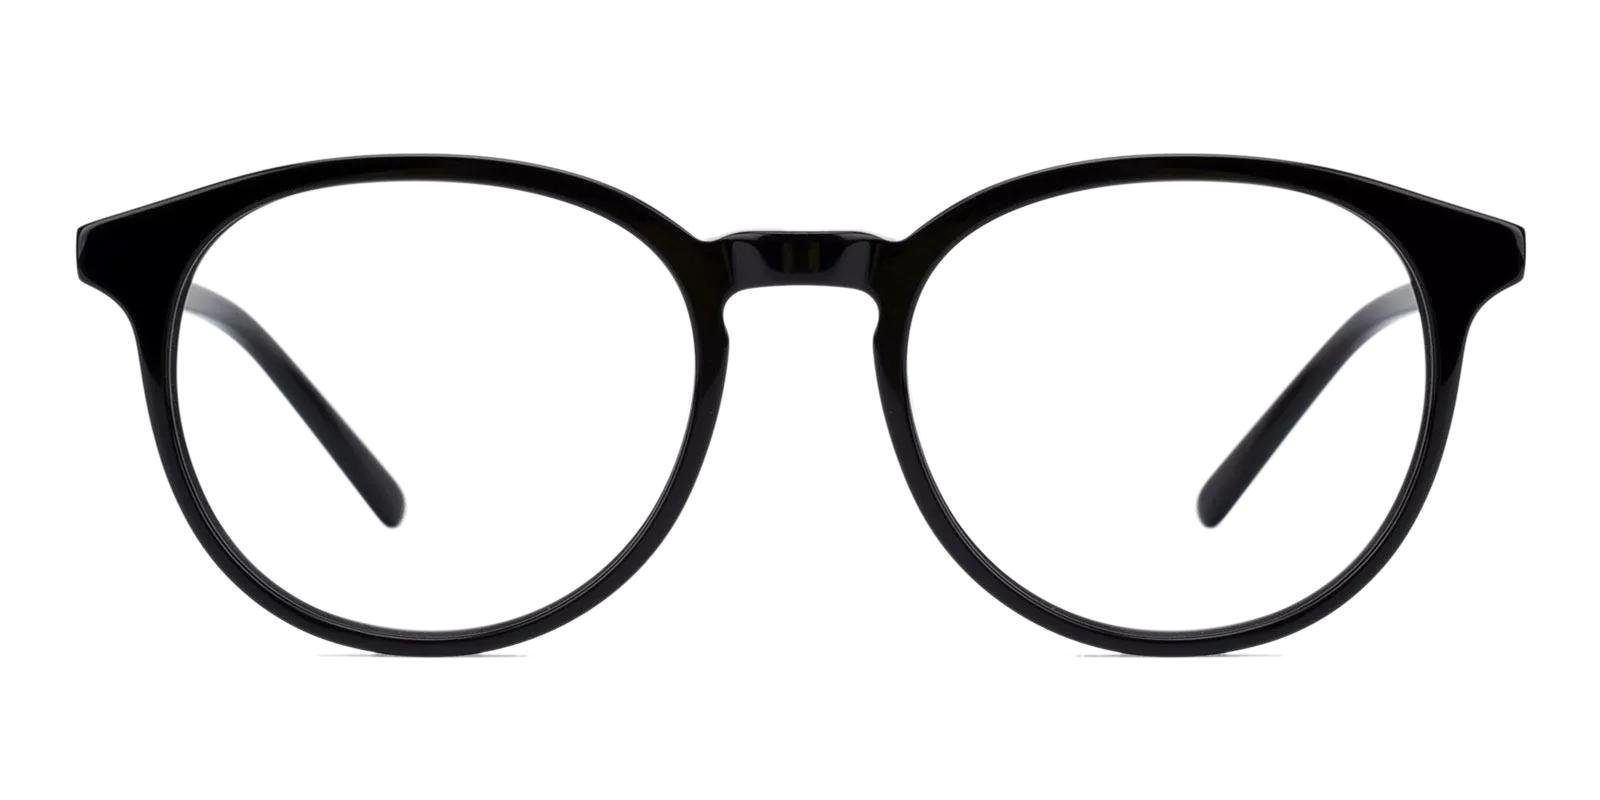 Tammy Black Acetate Eyeglasses , Fashion , SpringHinges , UniversalBridgeFit Frames from ABBE Glasses